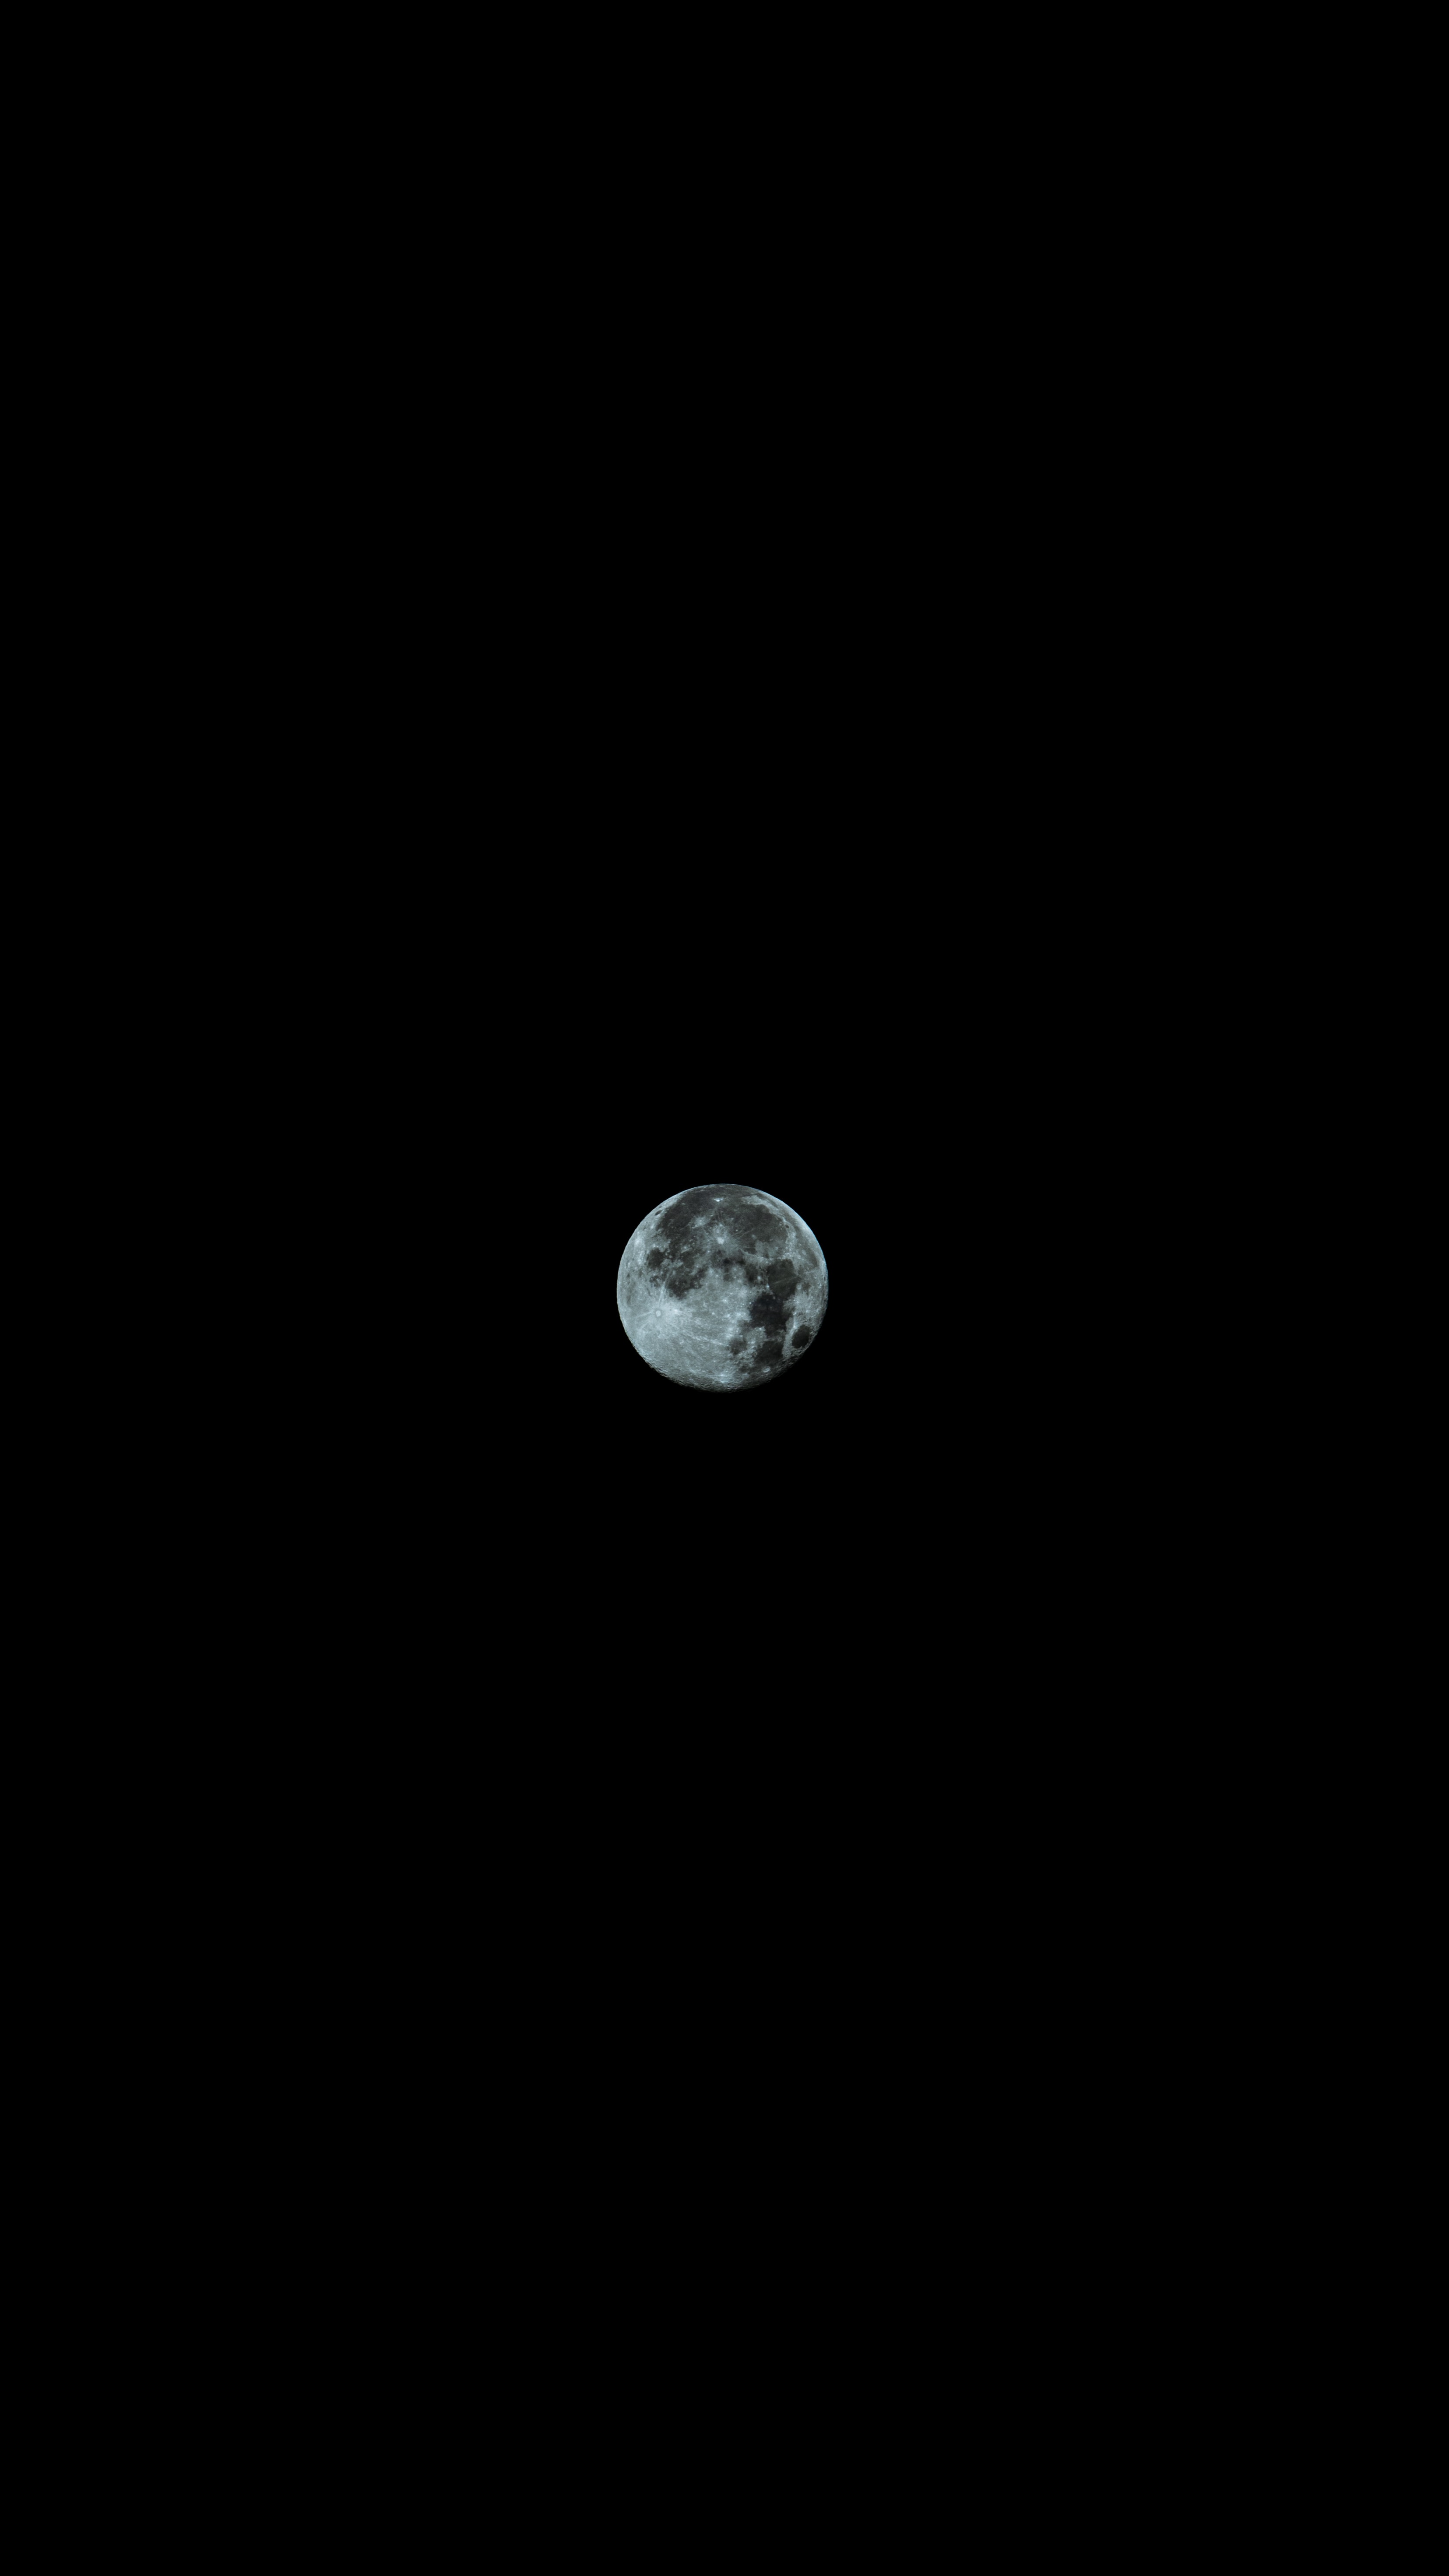 craters, black, moon, night 32K